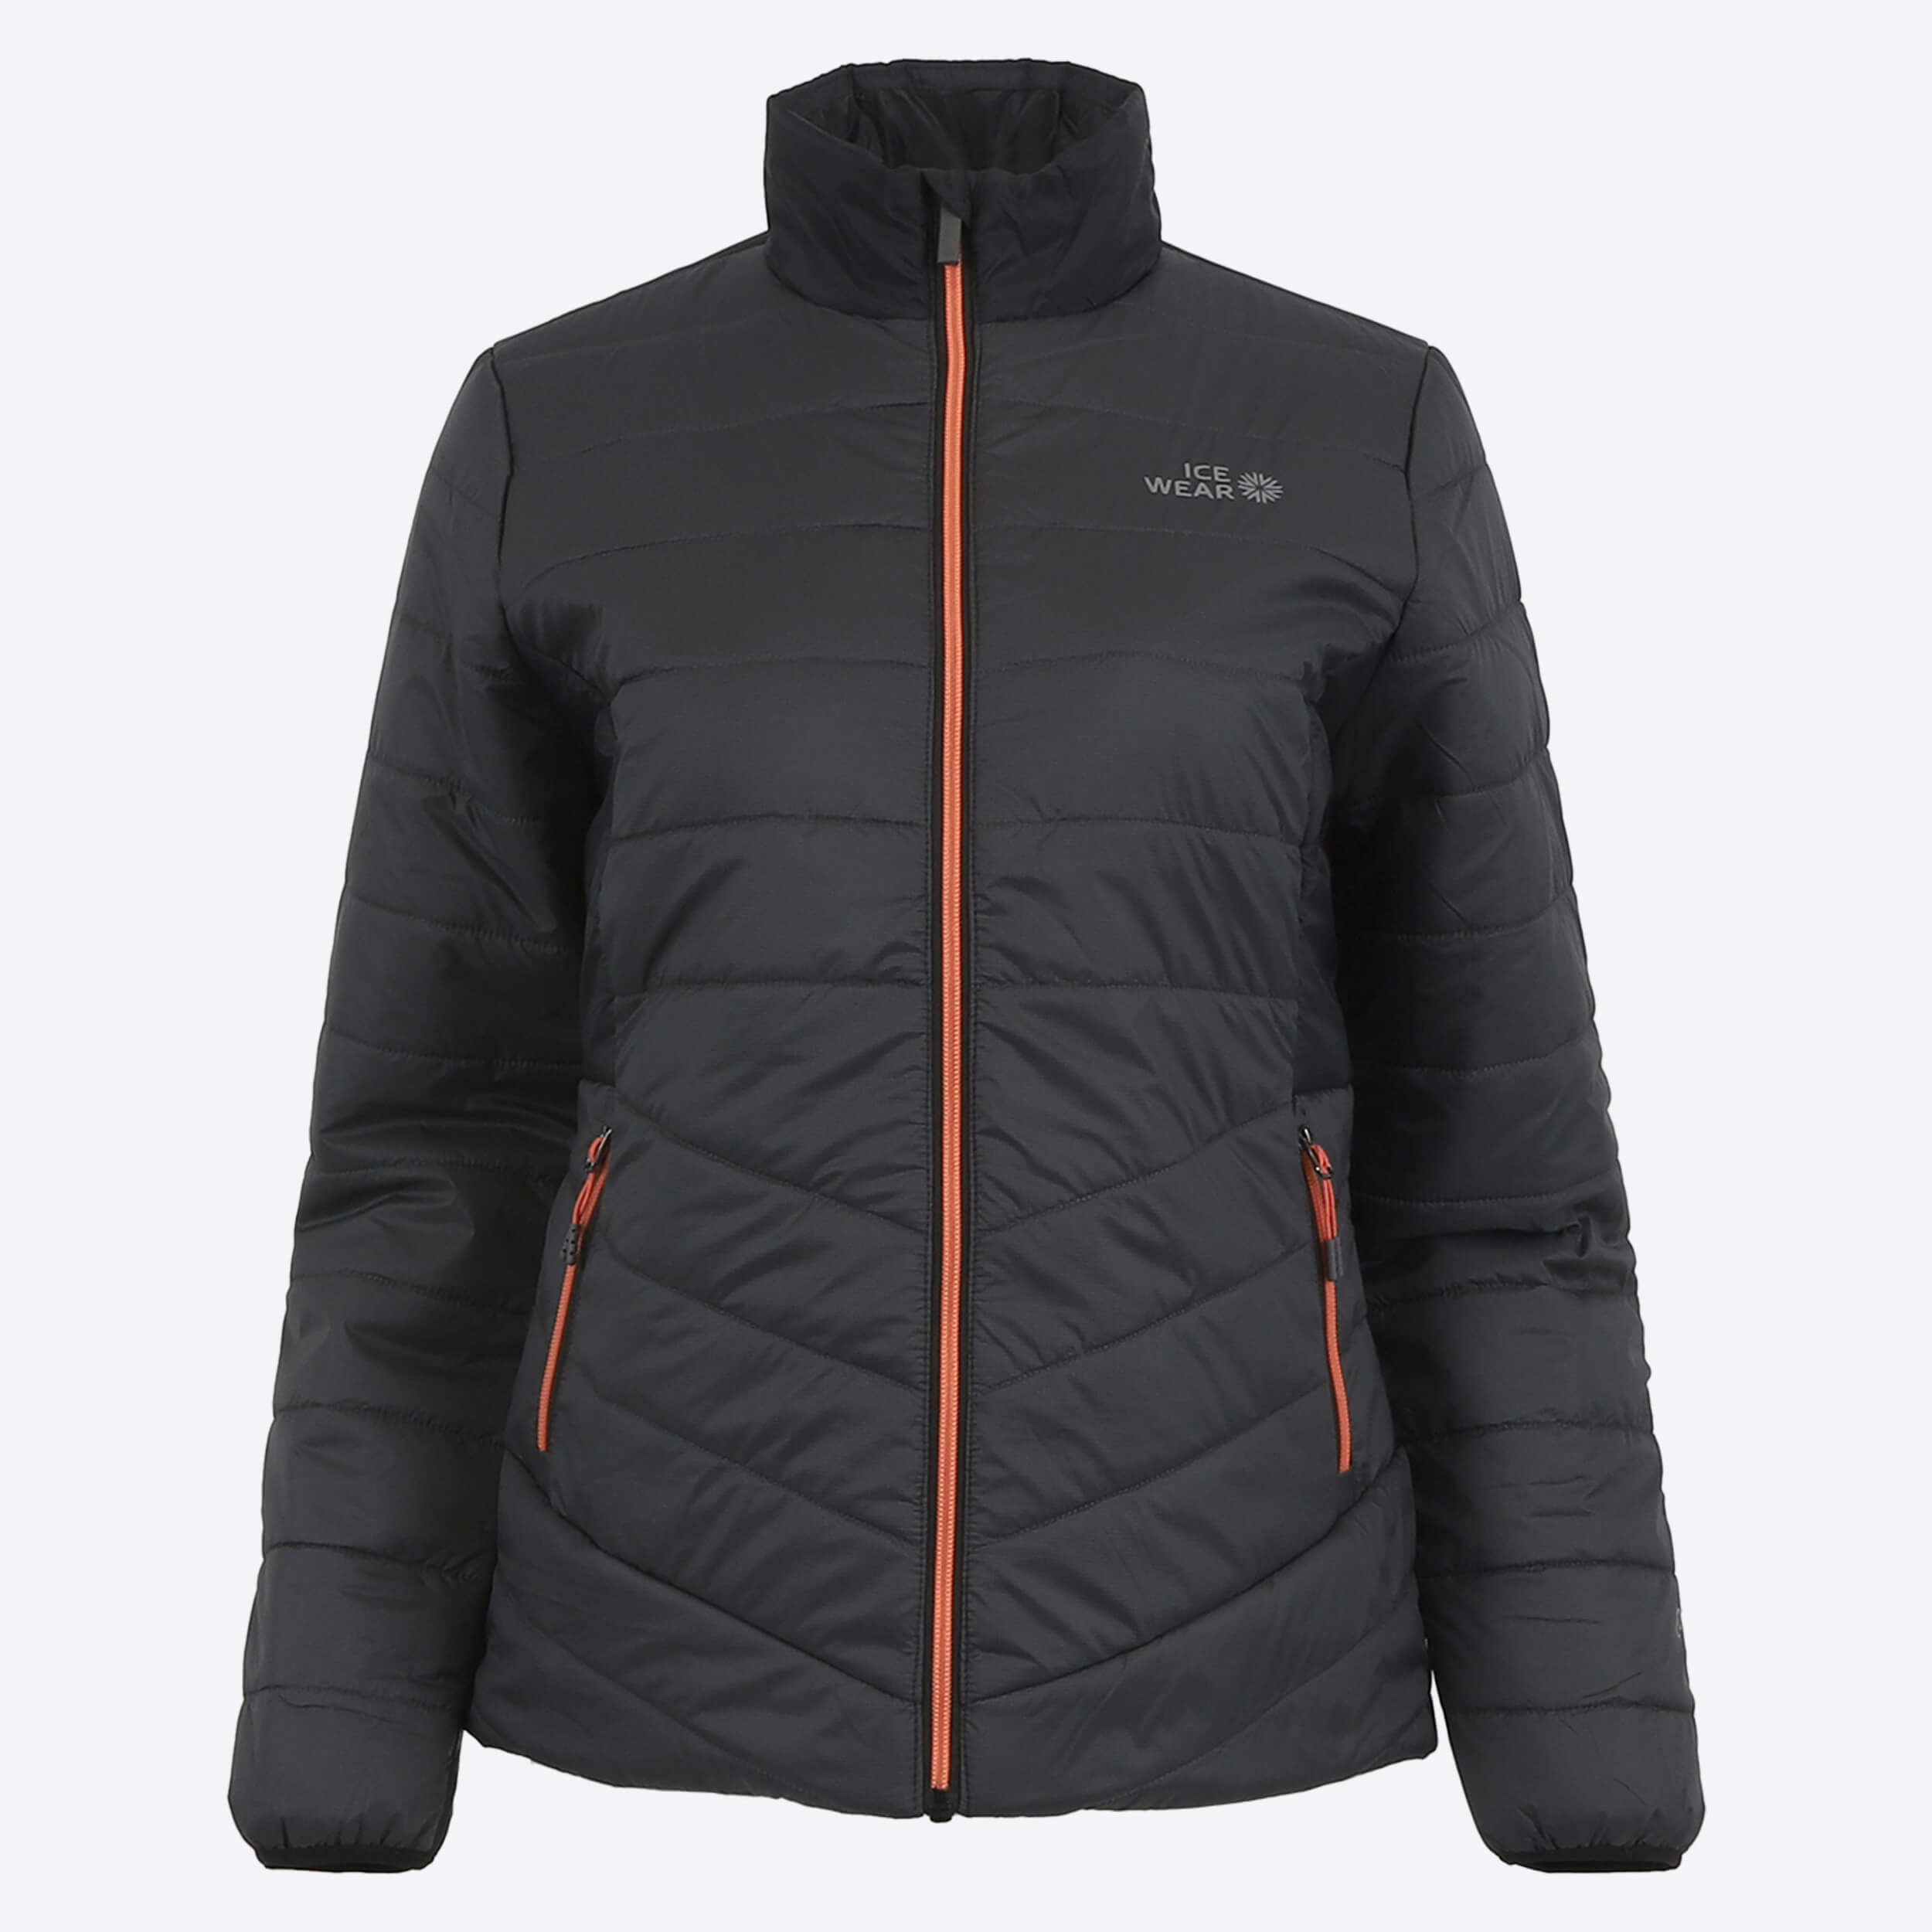 Geysir jacket insulated with wool